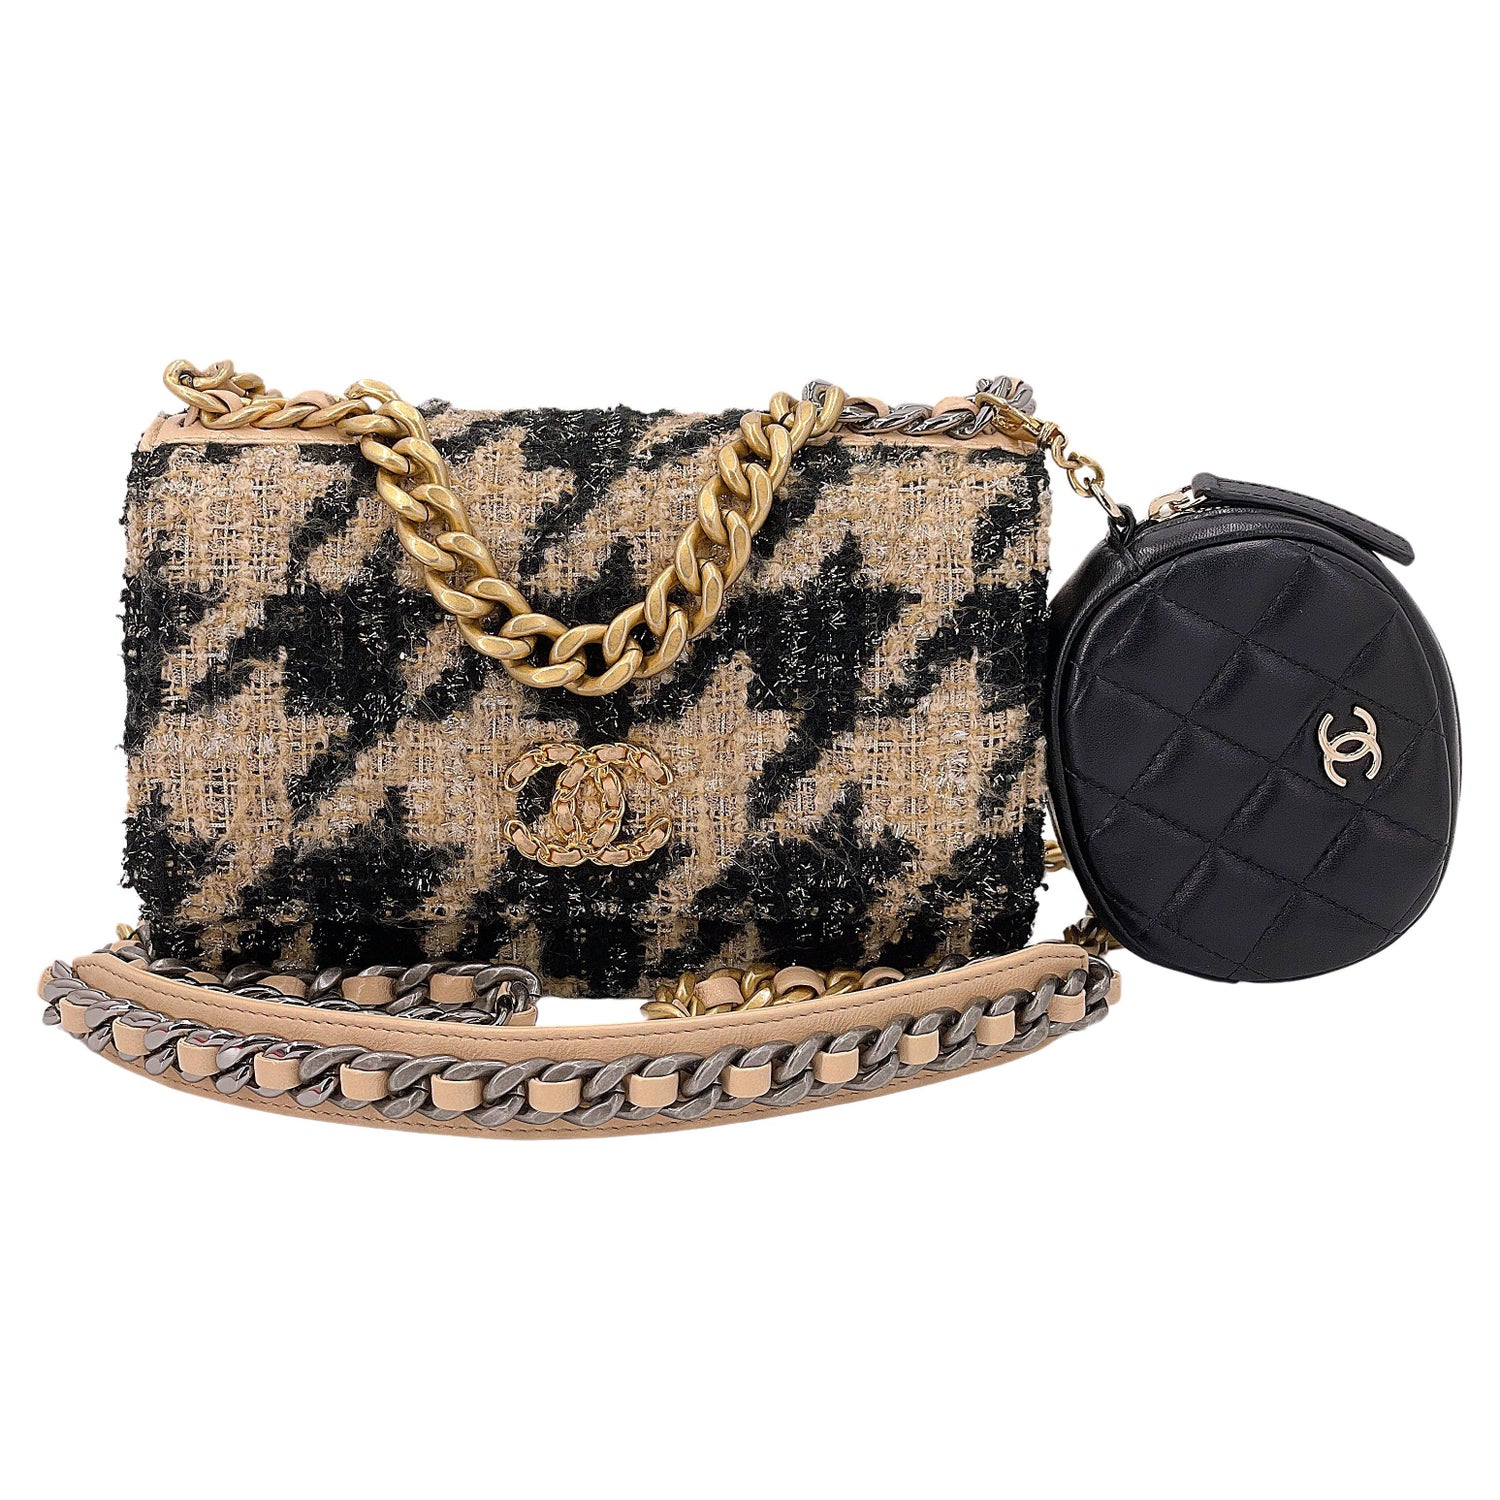 Chanel 19 Houndstooth Bag - 3 For Sale on 1stDibs